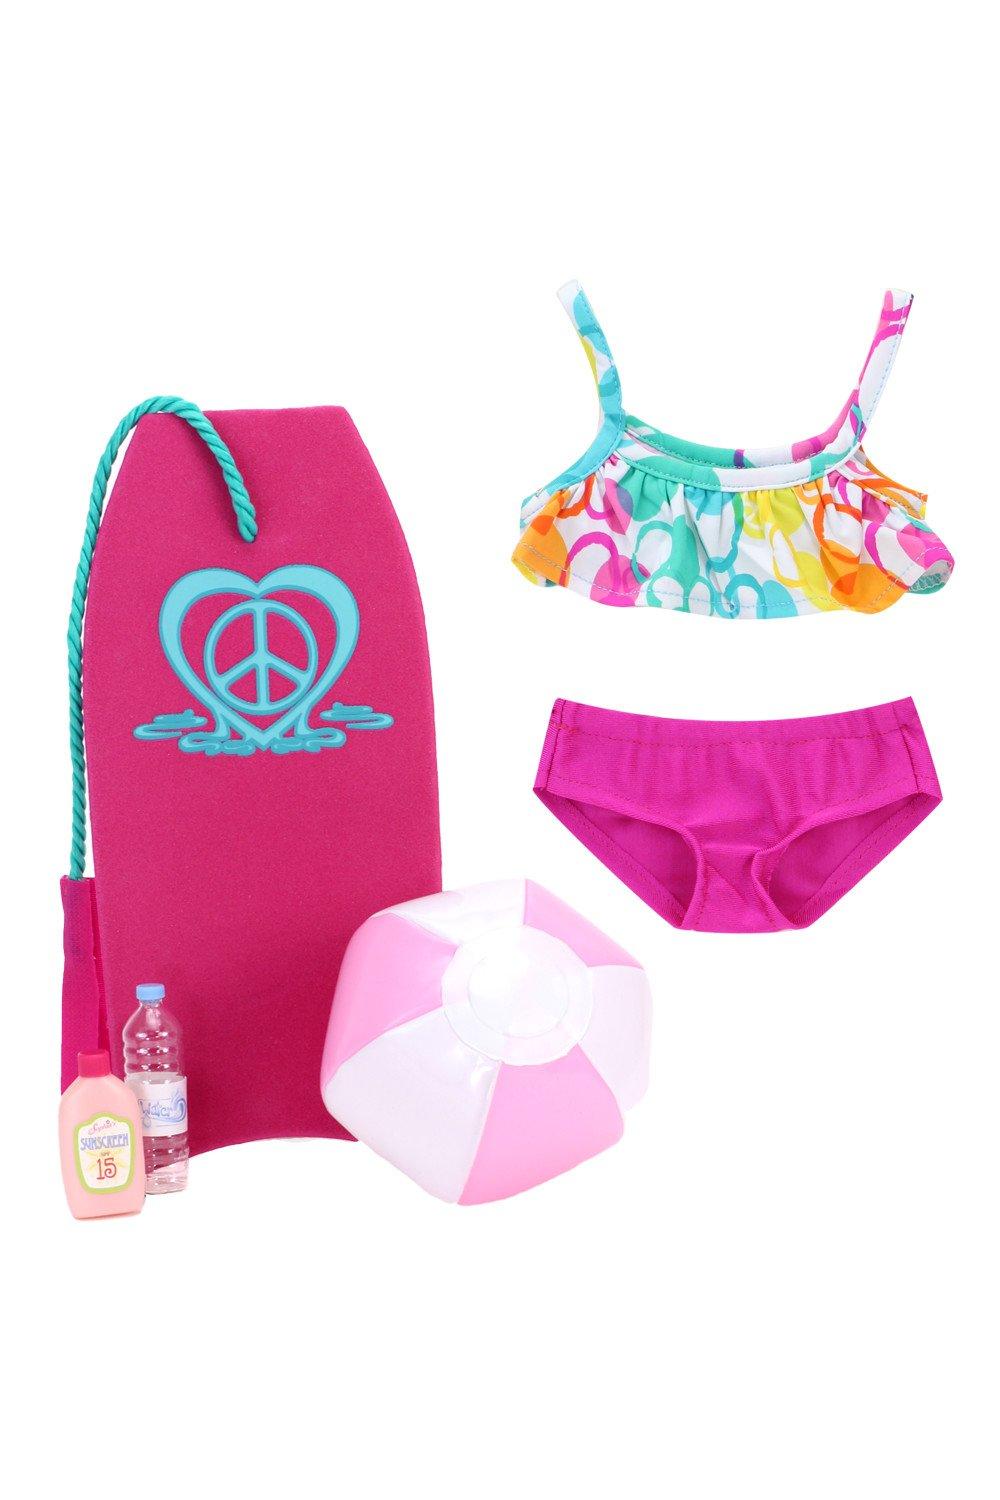 Sophia’s  18" Doll Bubble Bikini with 5 Play Beach Accessories